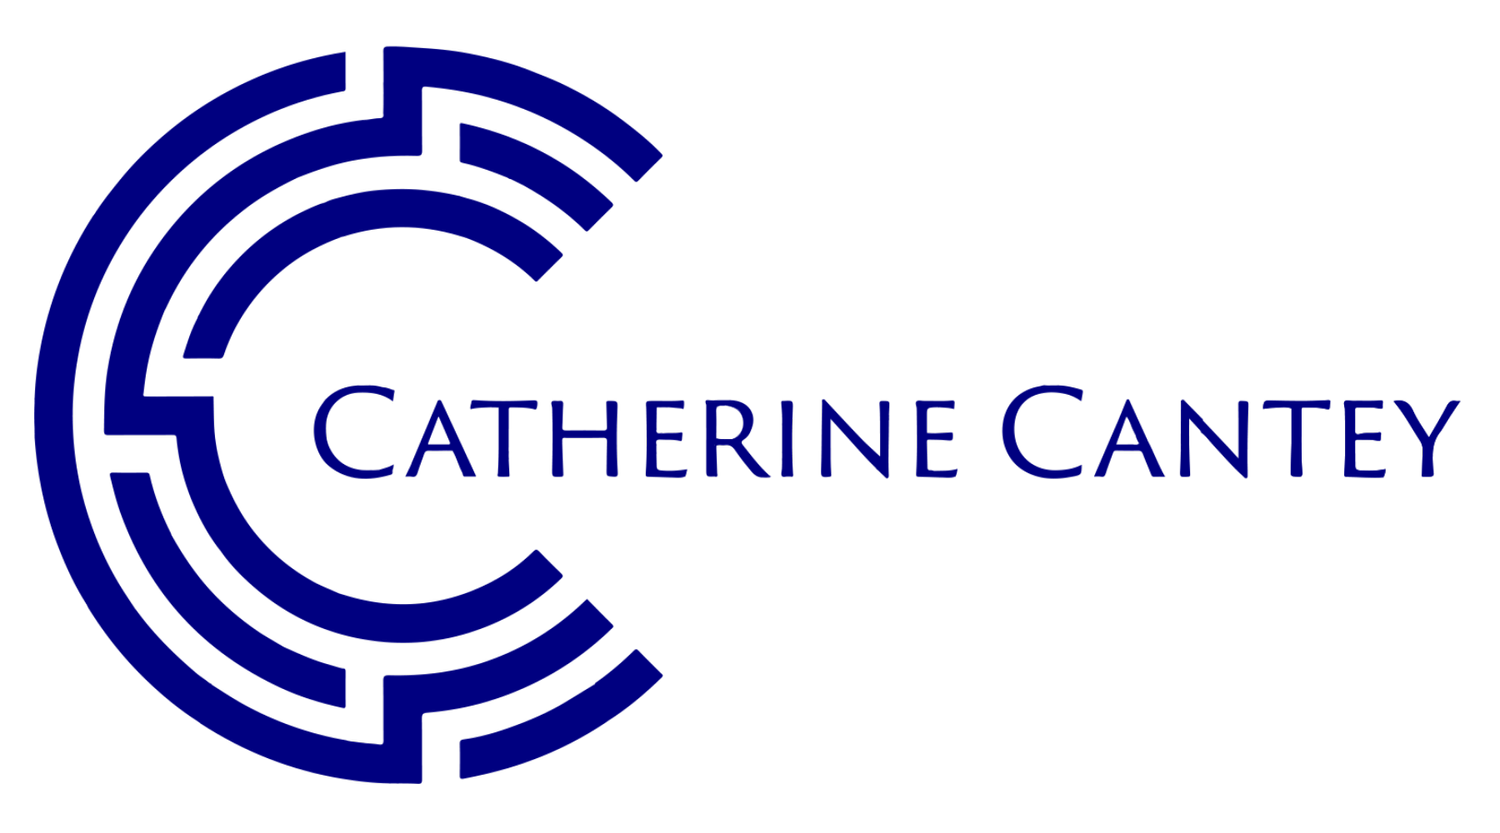 Catherine Cantey